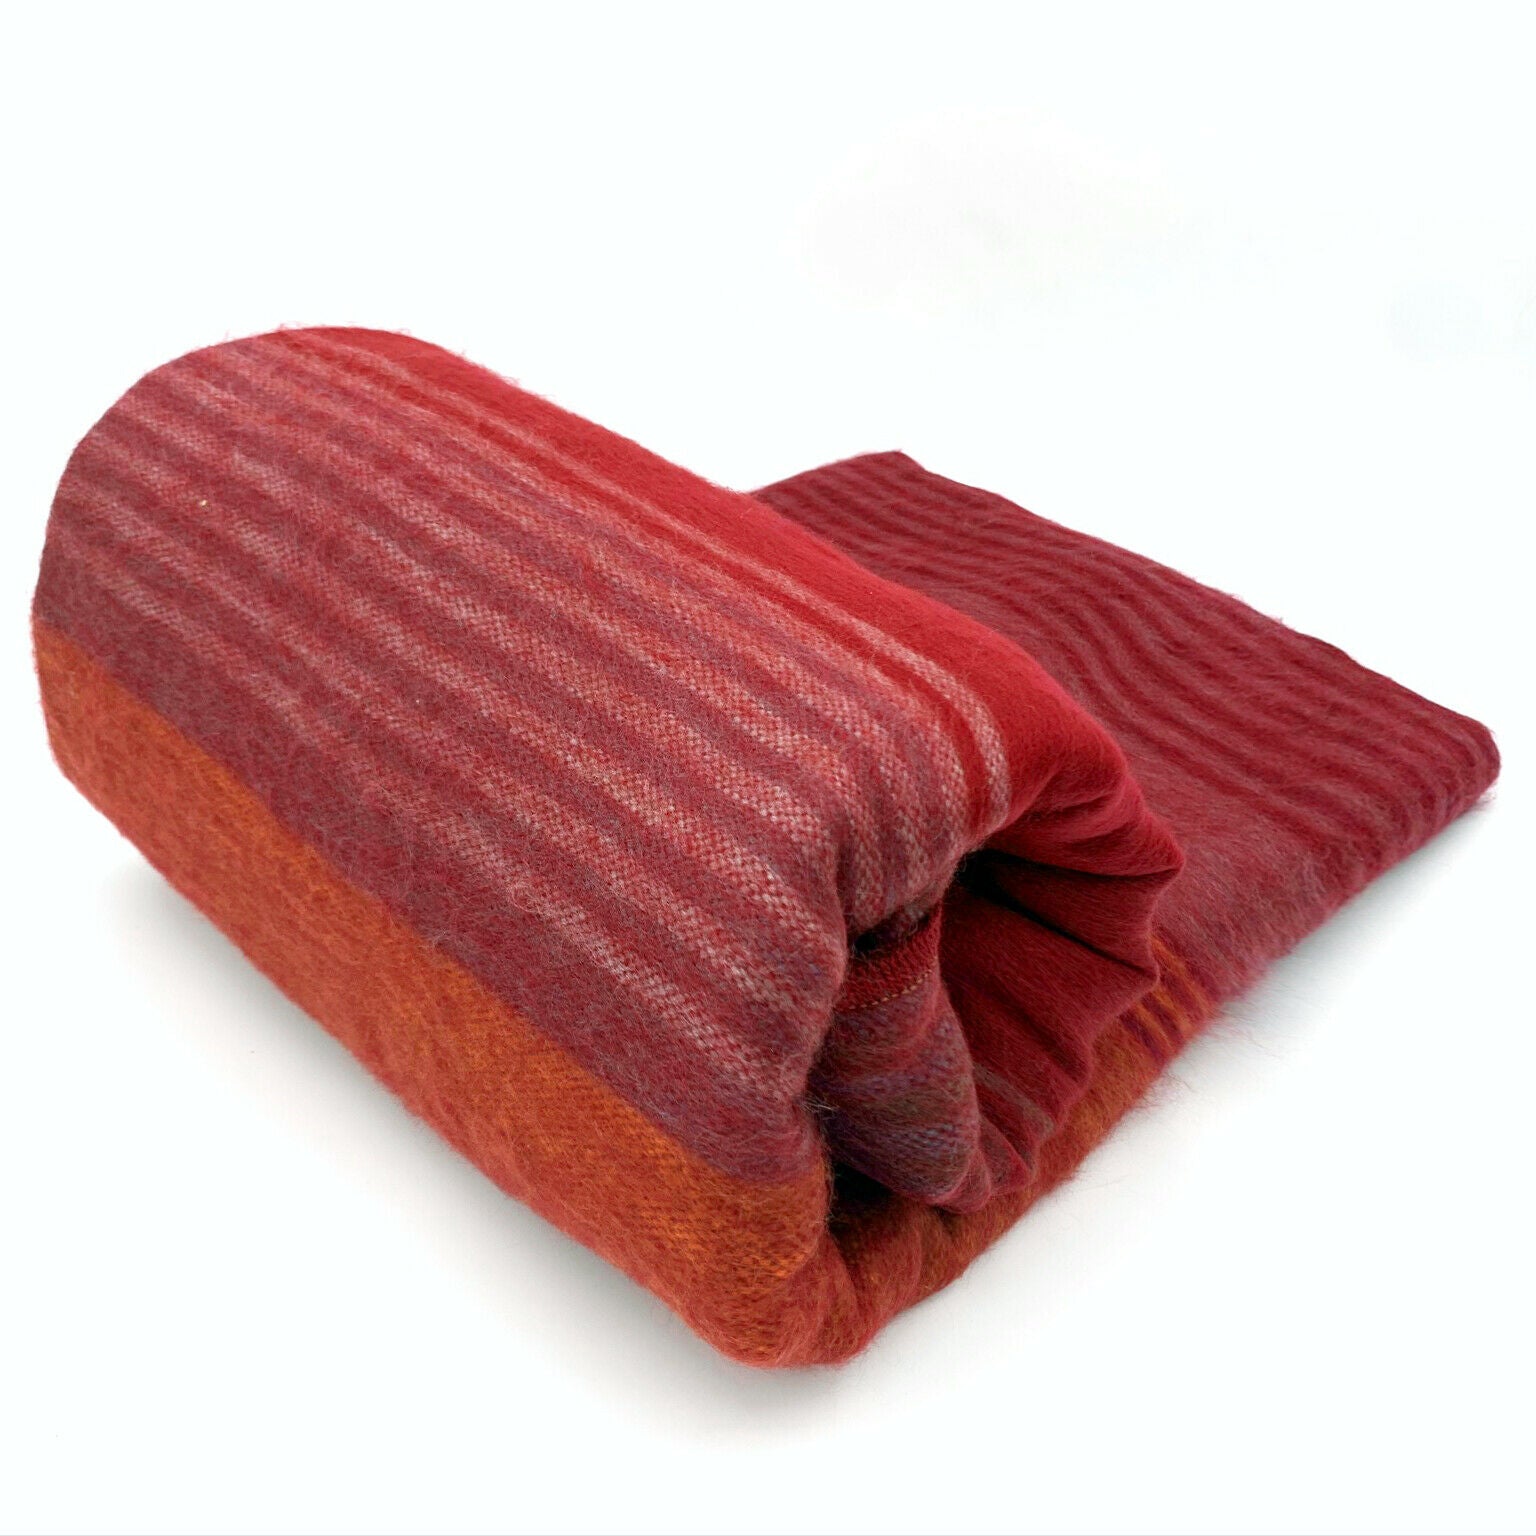 Pallatanga - Baby Alpaca Wool Throw Blanket / Sofa Cover - Queen 95" x 65" - multi colored stripes pattern